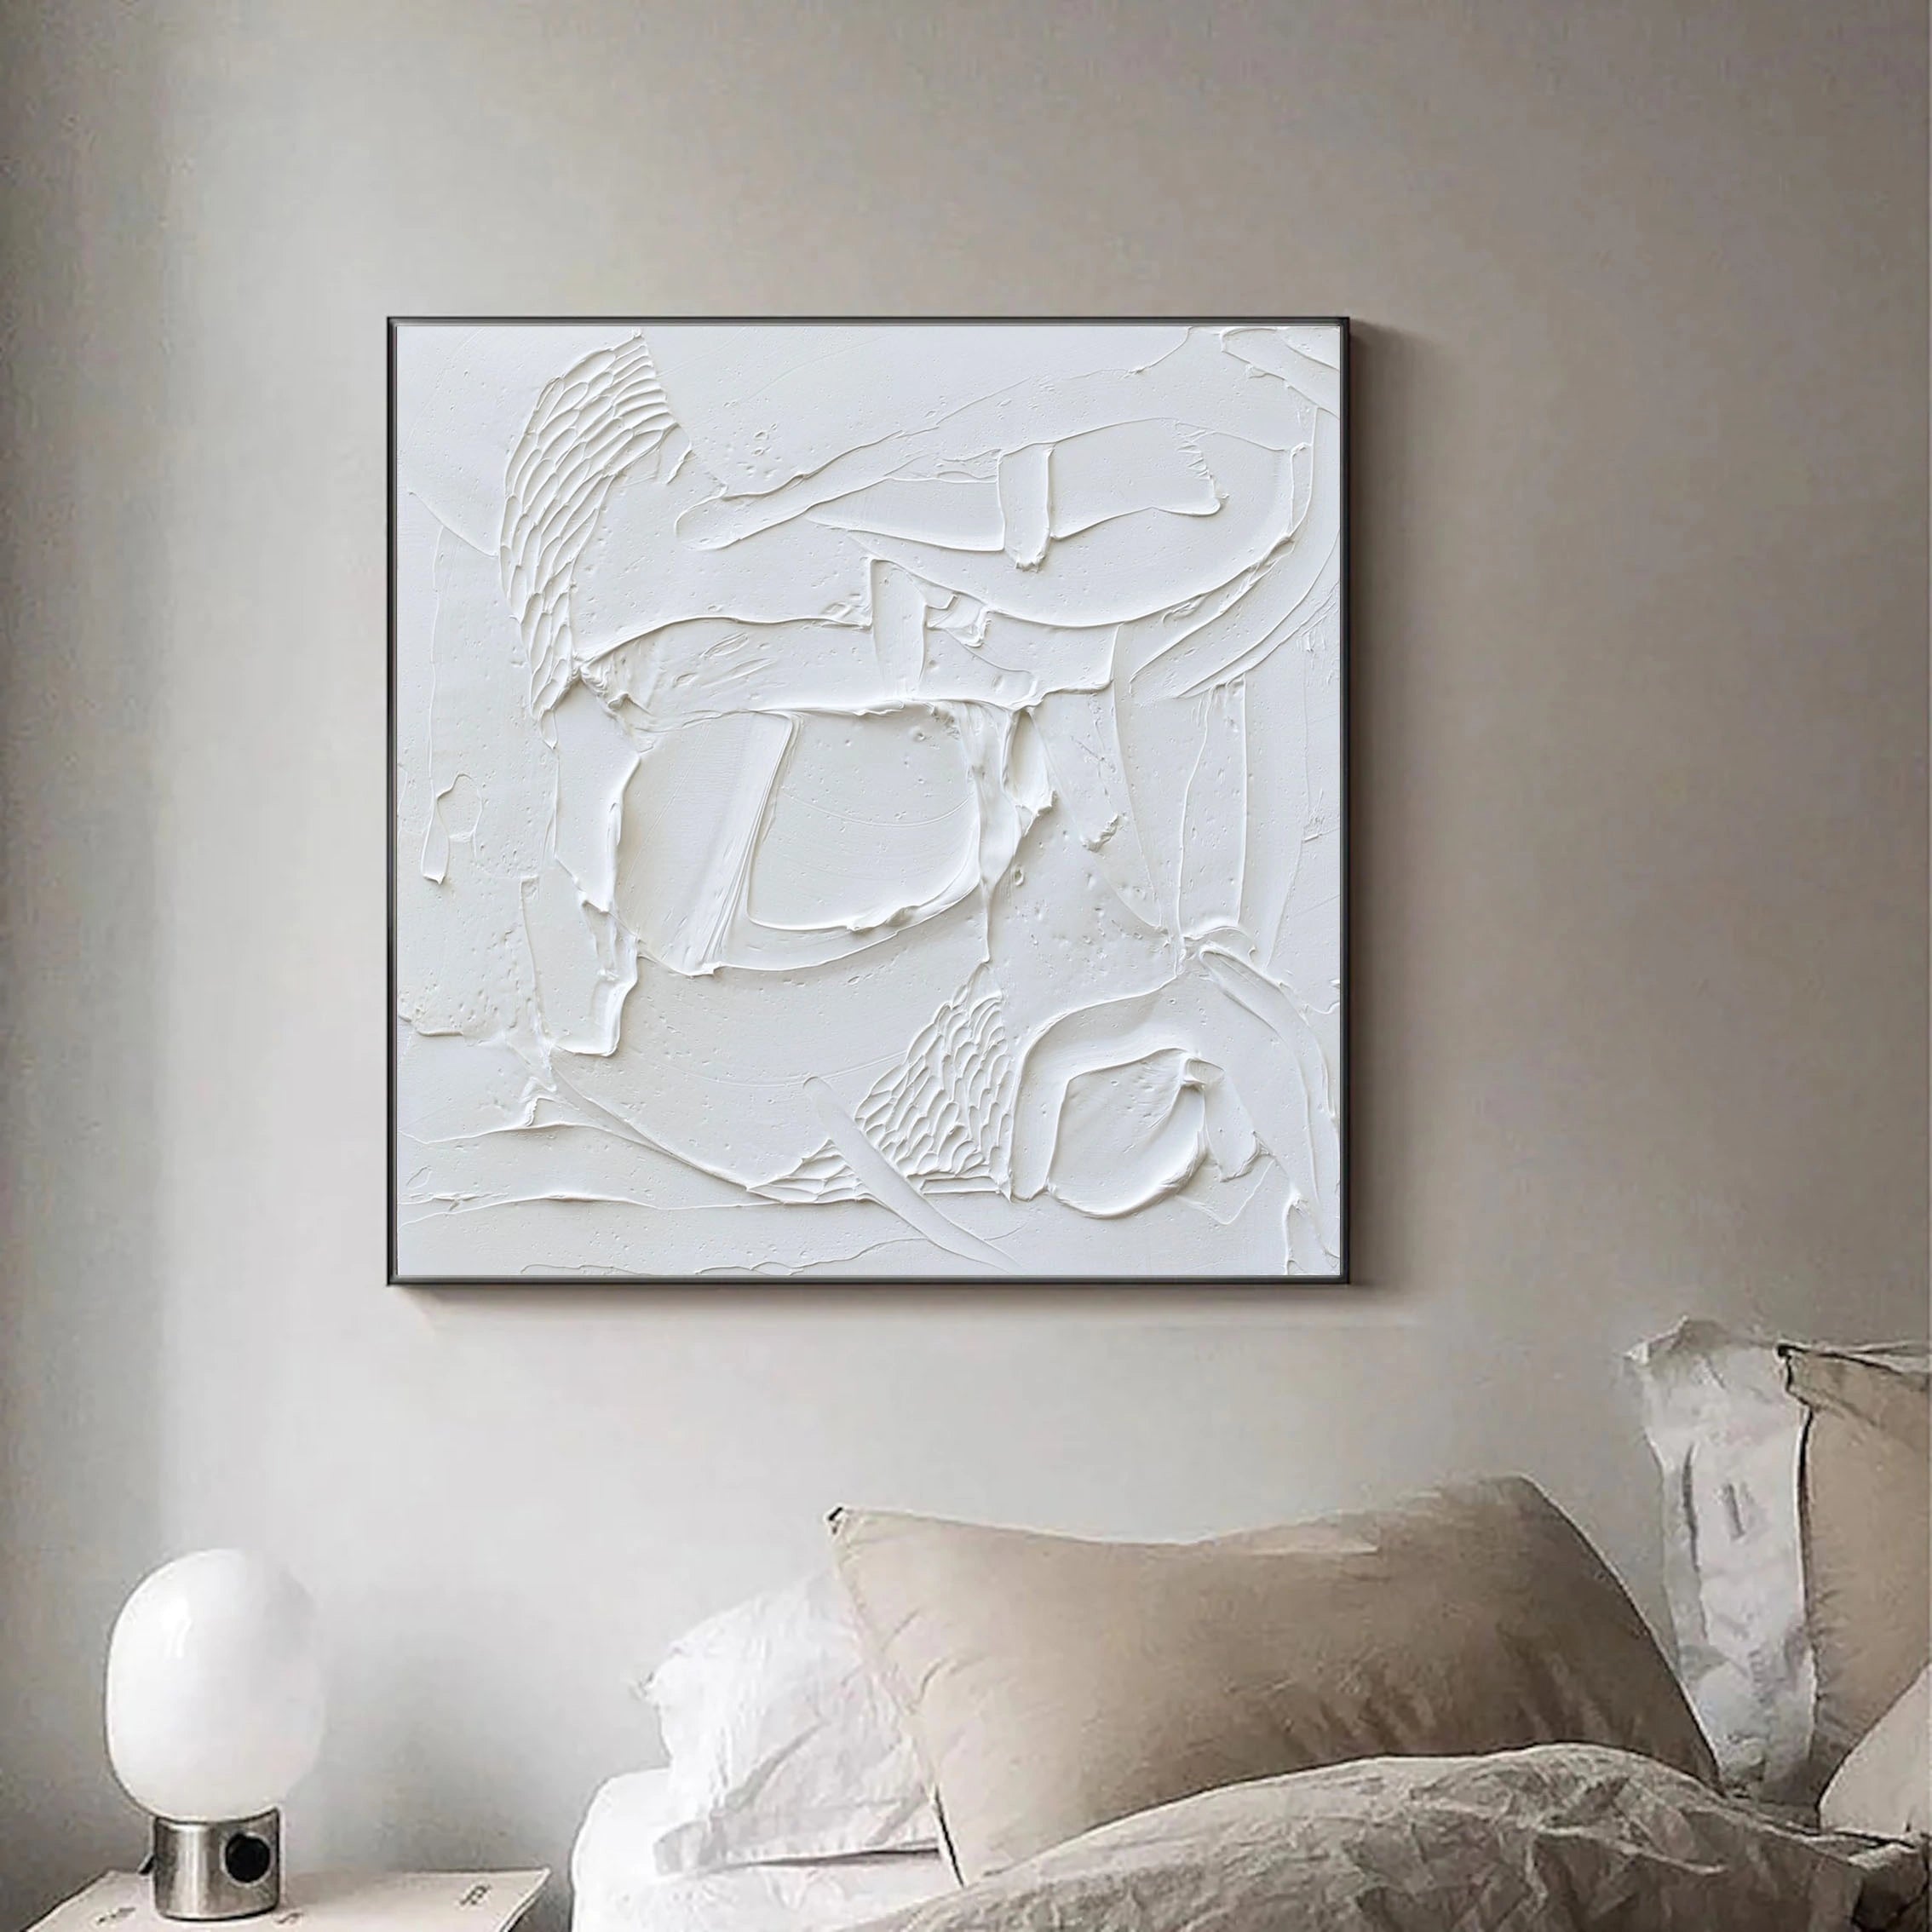 Minimalist White Plaster Art Painting on Canvas Original for Bedroom